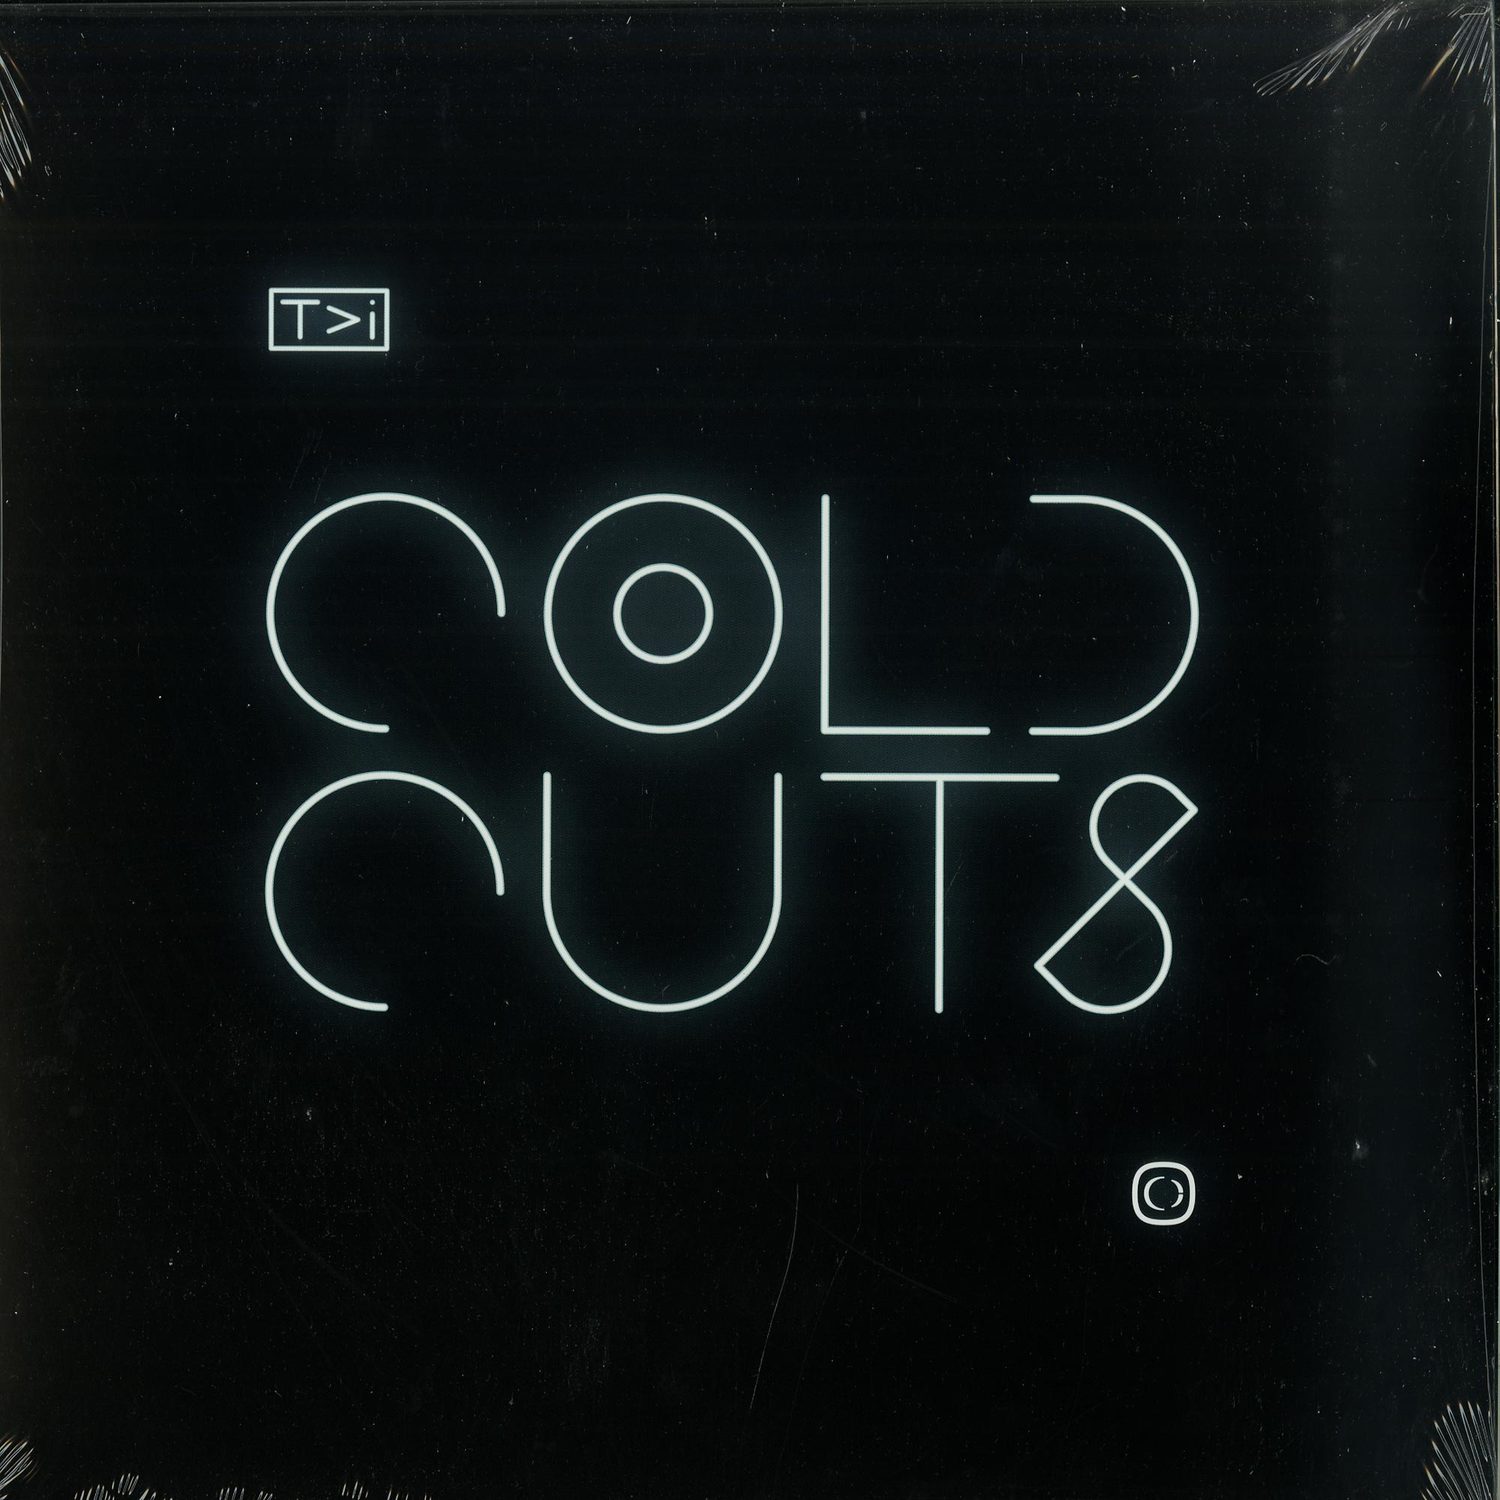 T>I - COLD CUTS 